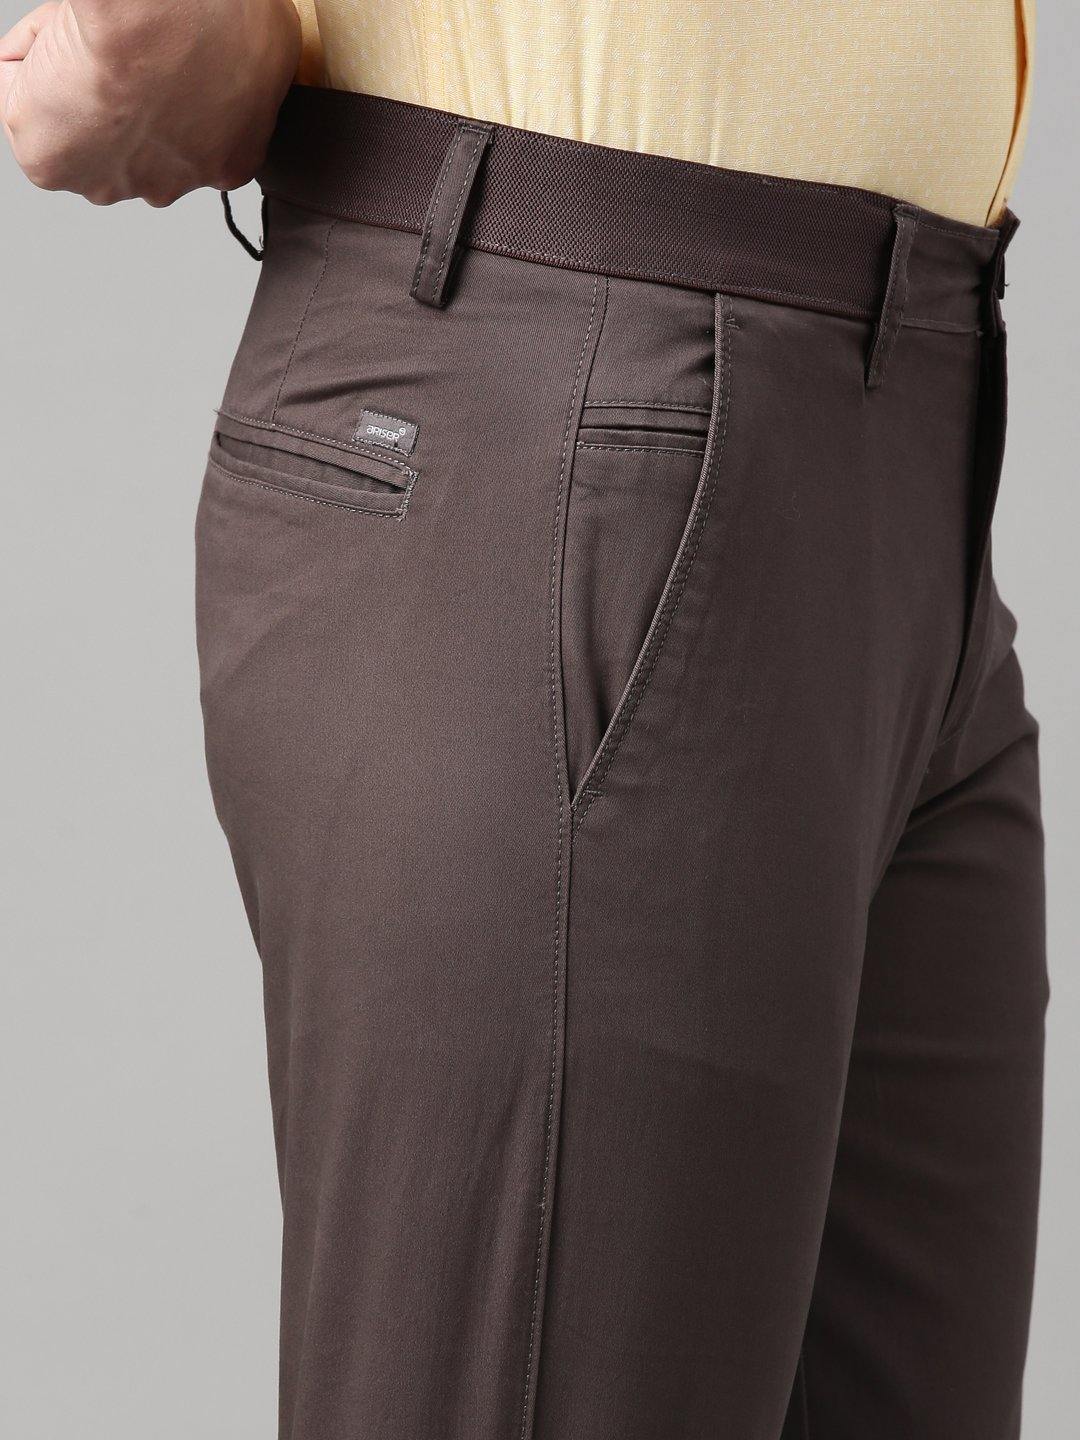 OEM Mens Plaid Skinny Pencil Pants Zipper Elastic Waist Mens Business Formal  Pants  China Mens Pants and Autumn and Winter Pants price   MadeinChinacom